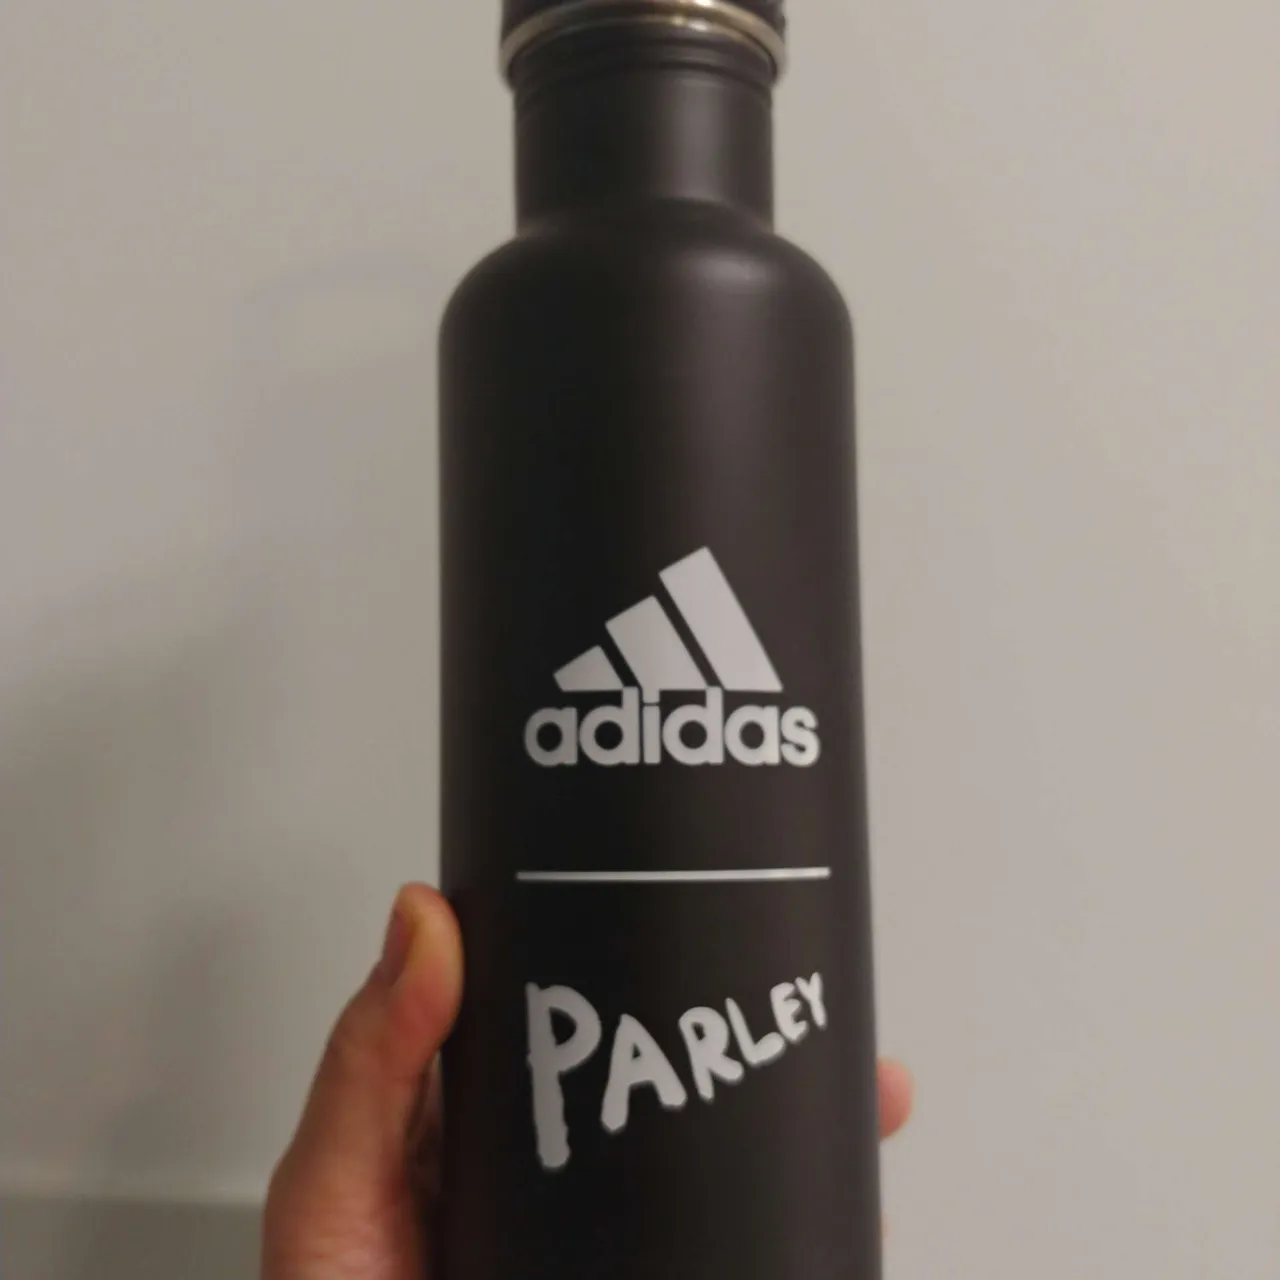 BNIB Adidas x Parley Sportchek water bottle photo 1